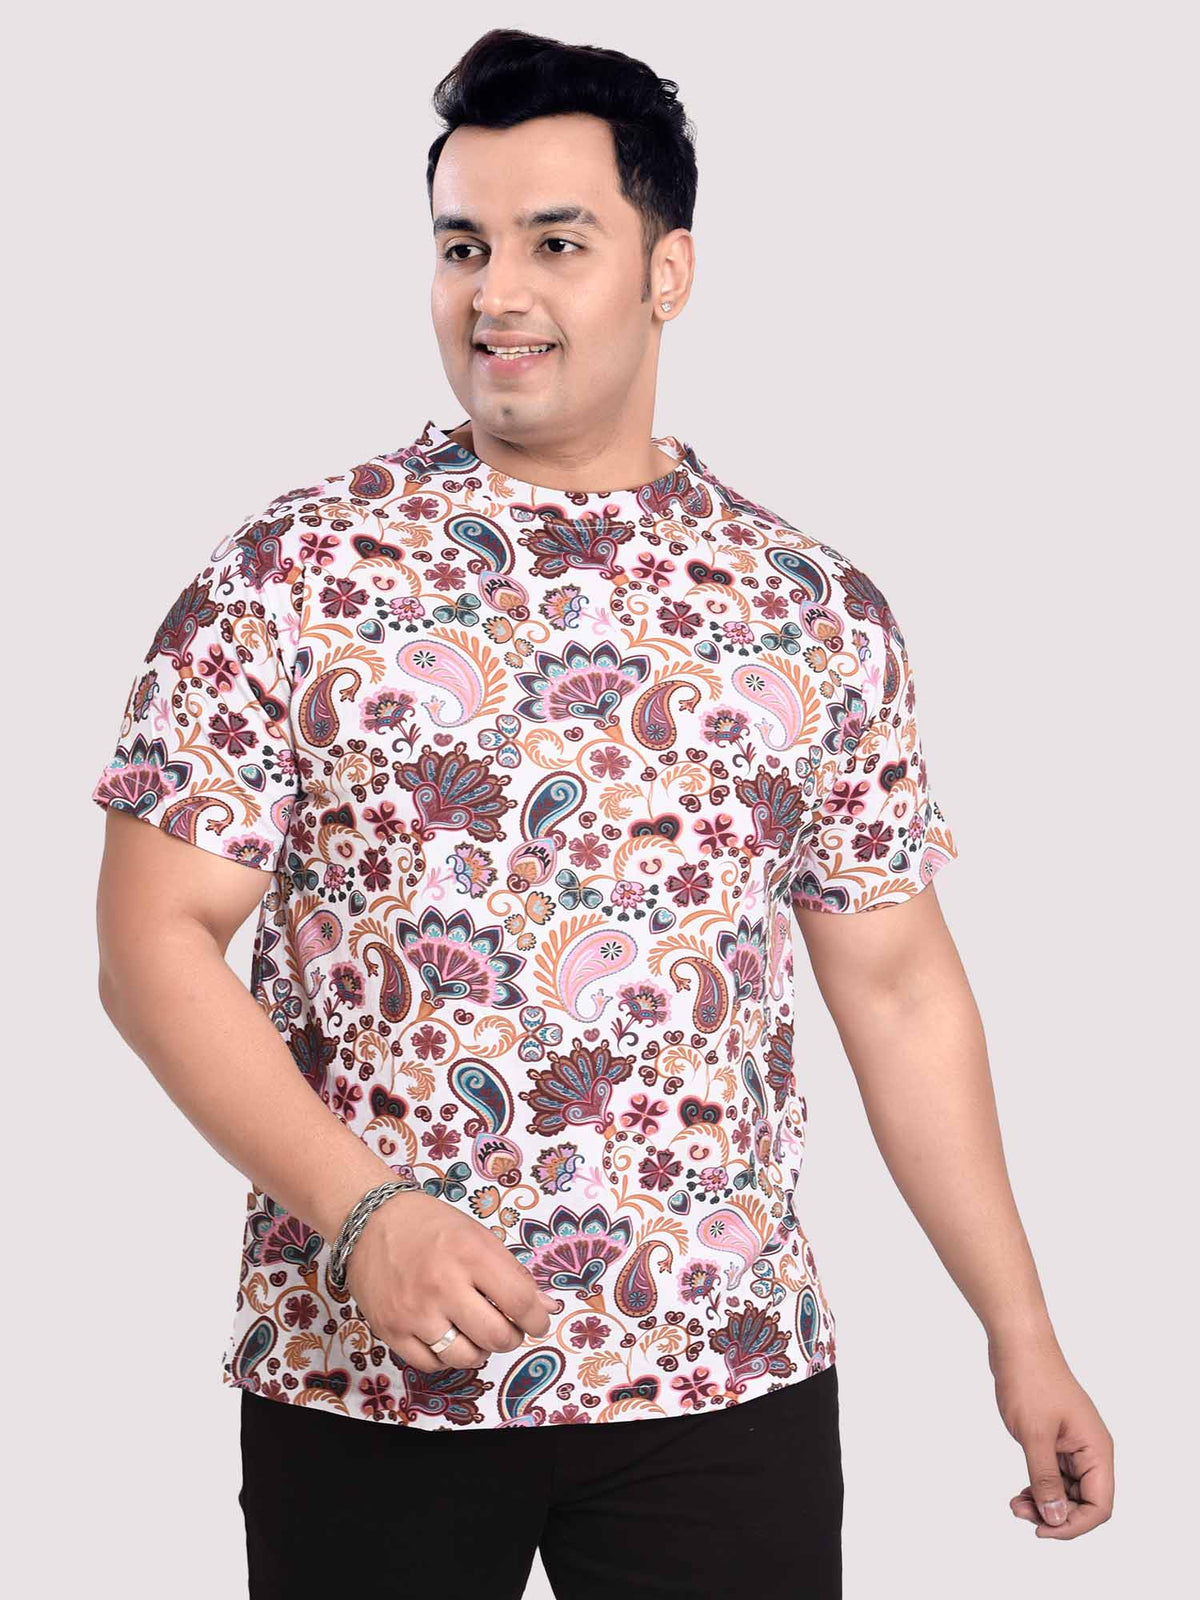 Paisely  Digital Printed Round Neck T-Shirt Men's Plus Size